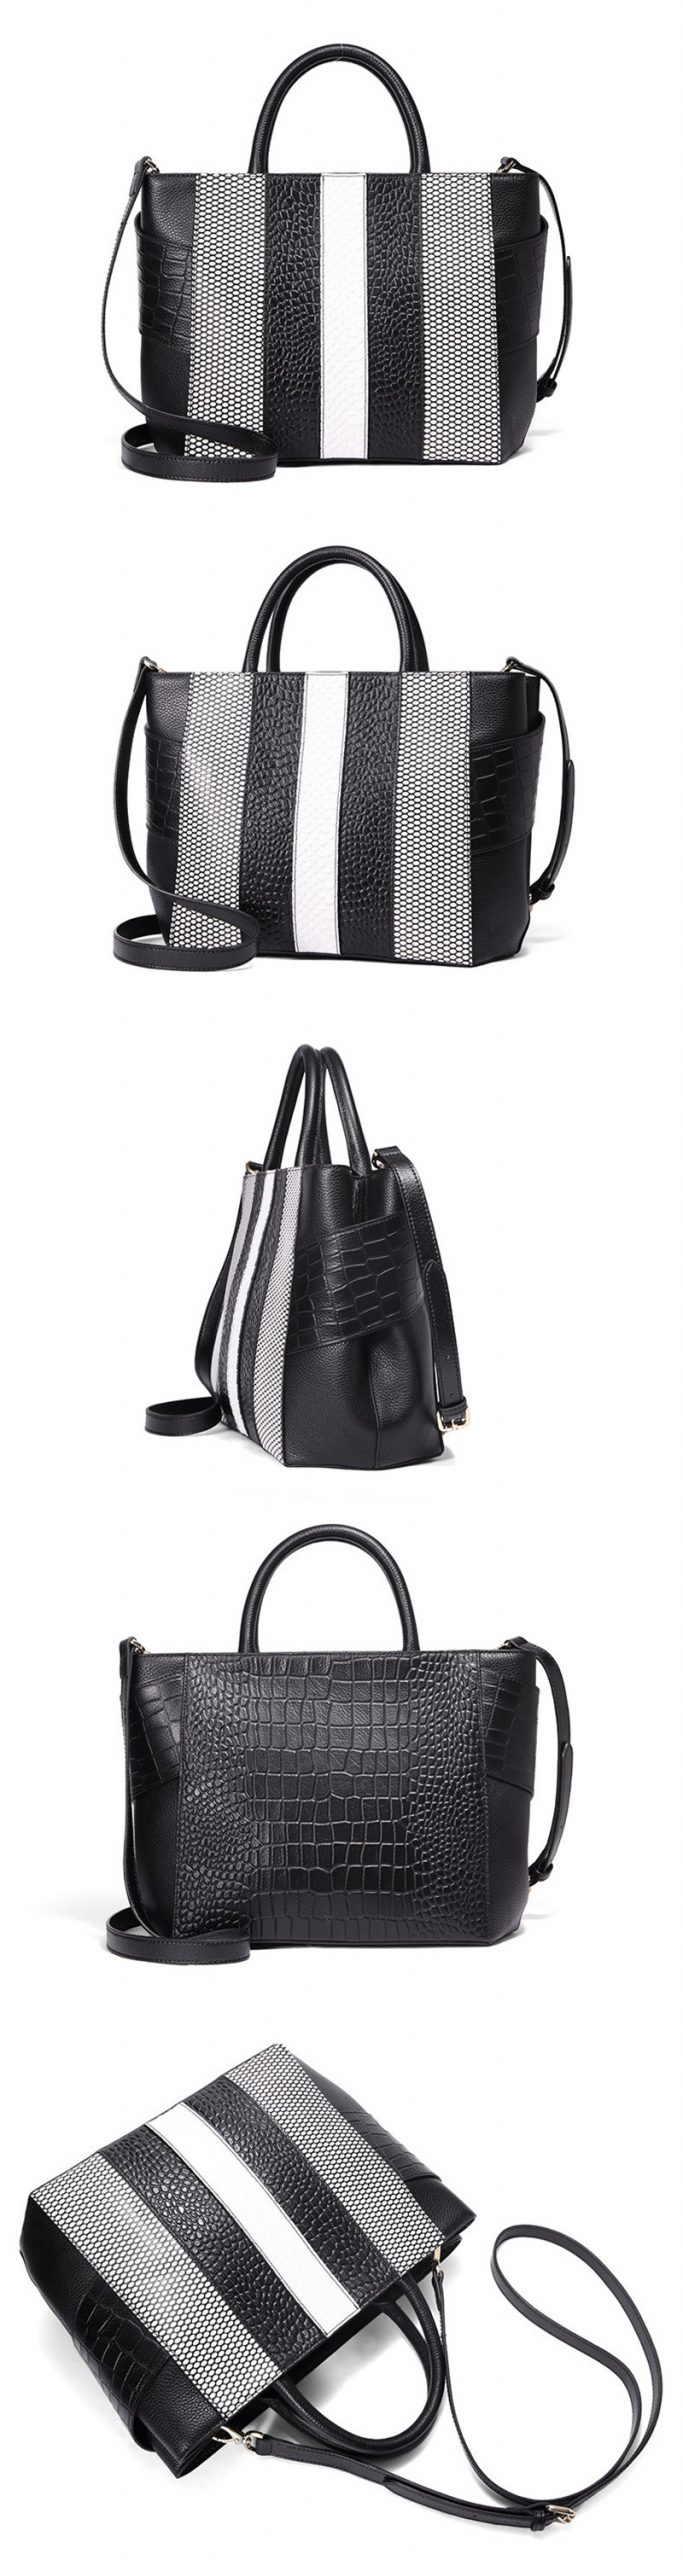 Luxury Elegant Top Handle Designer Handbag1 2 scaled